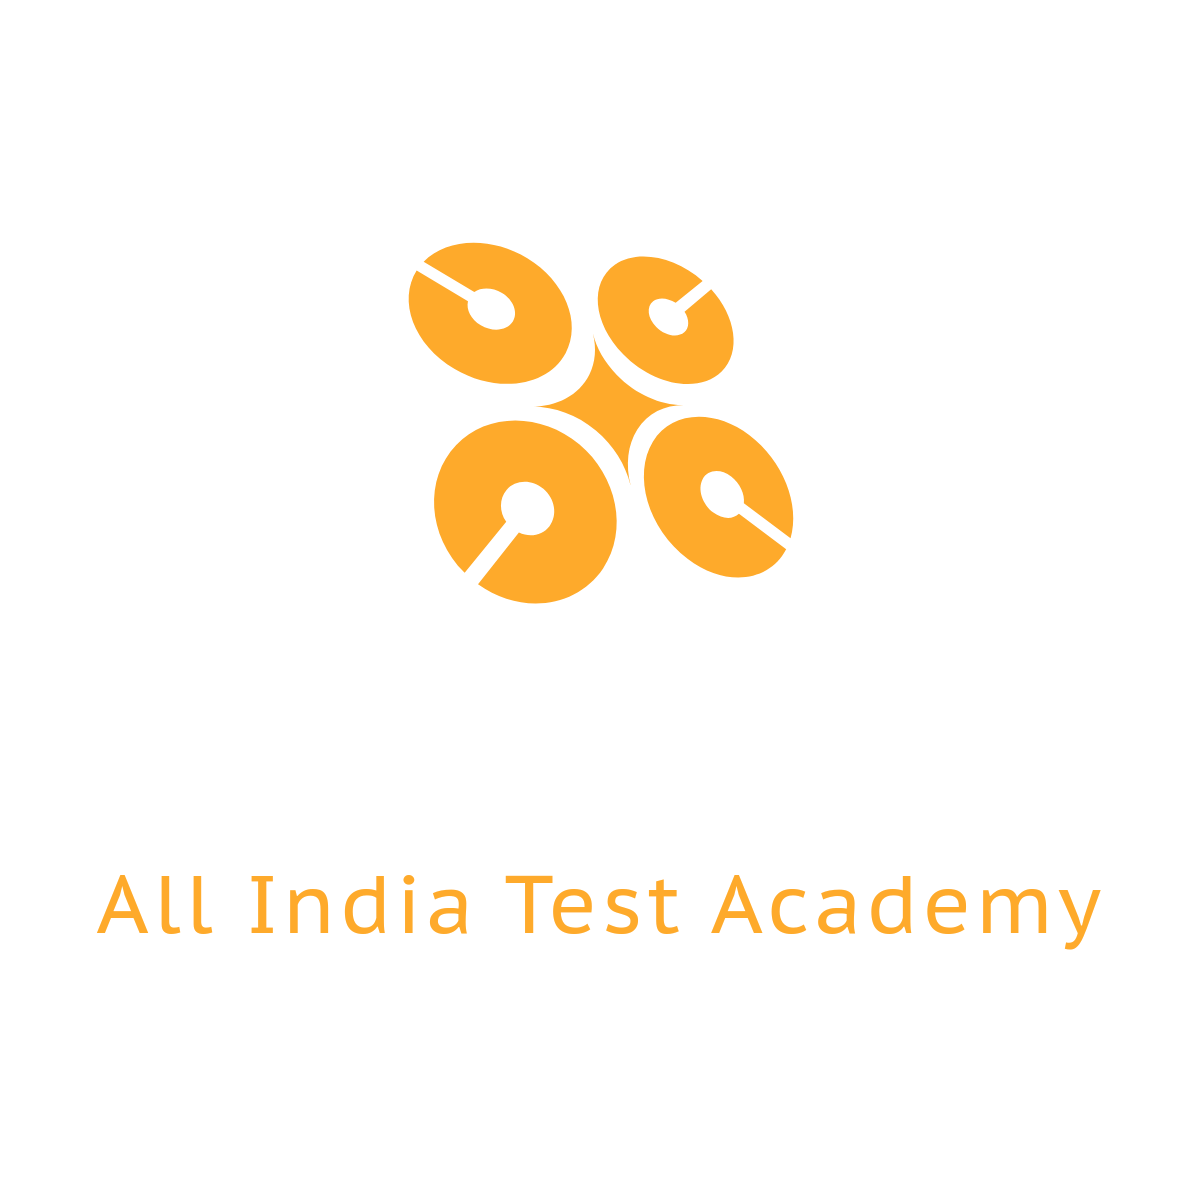 Test Duniya